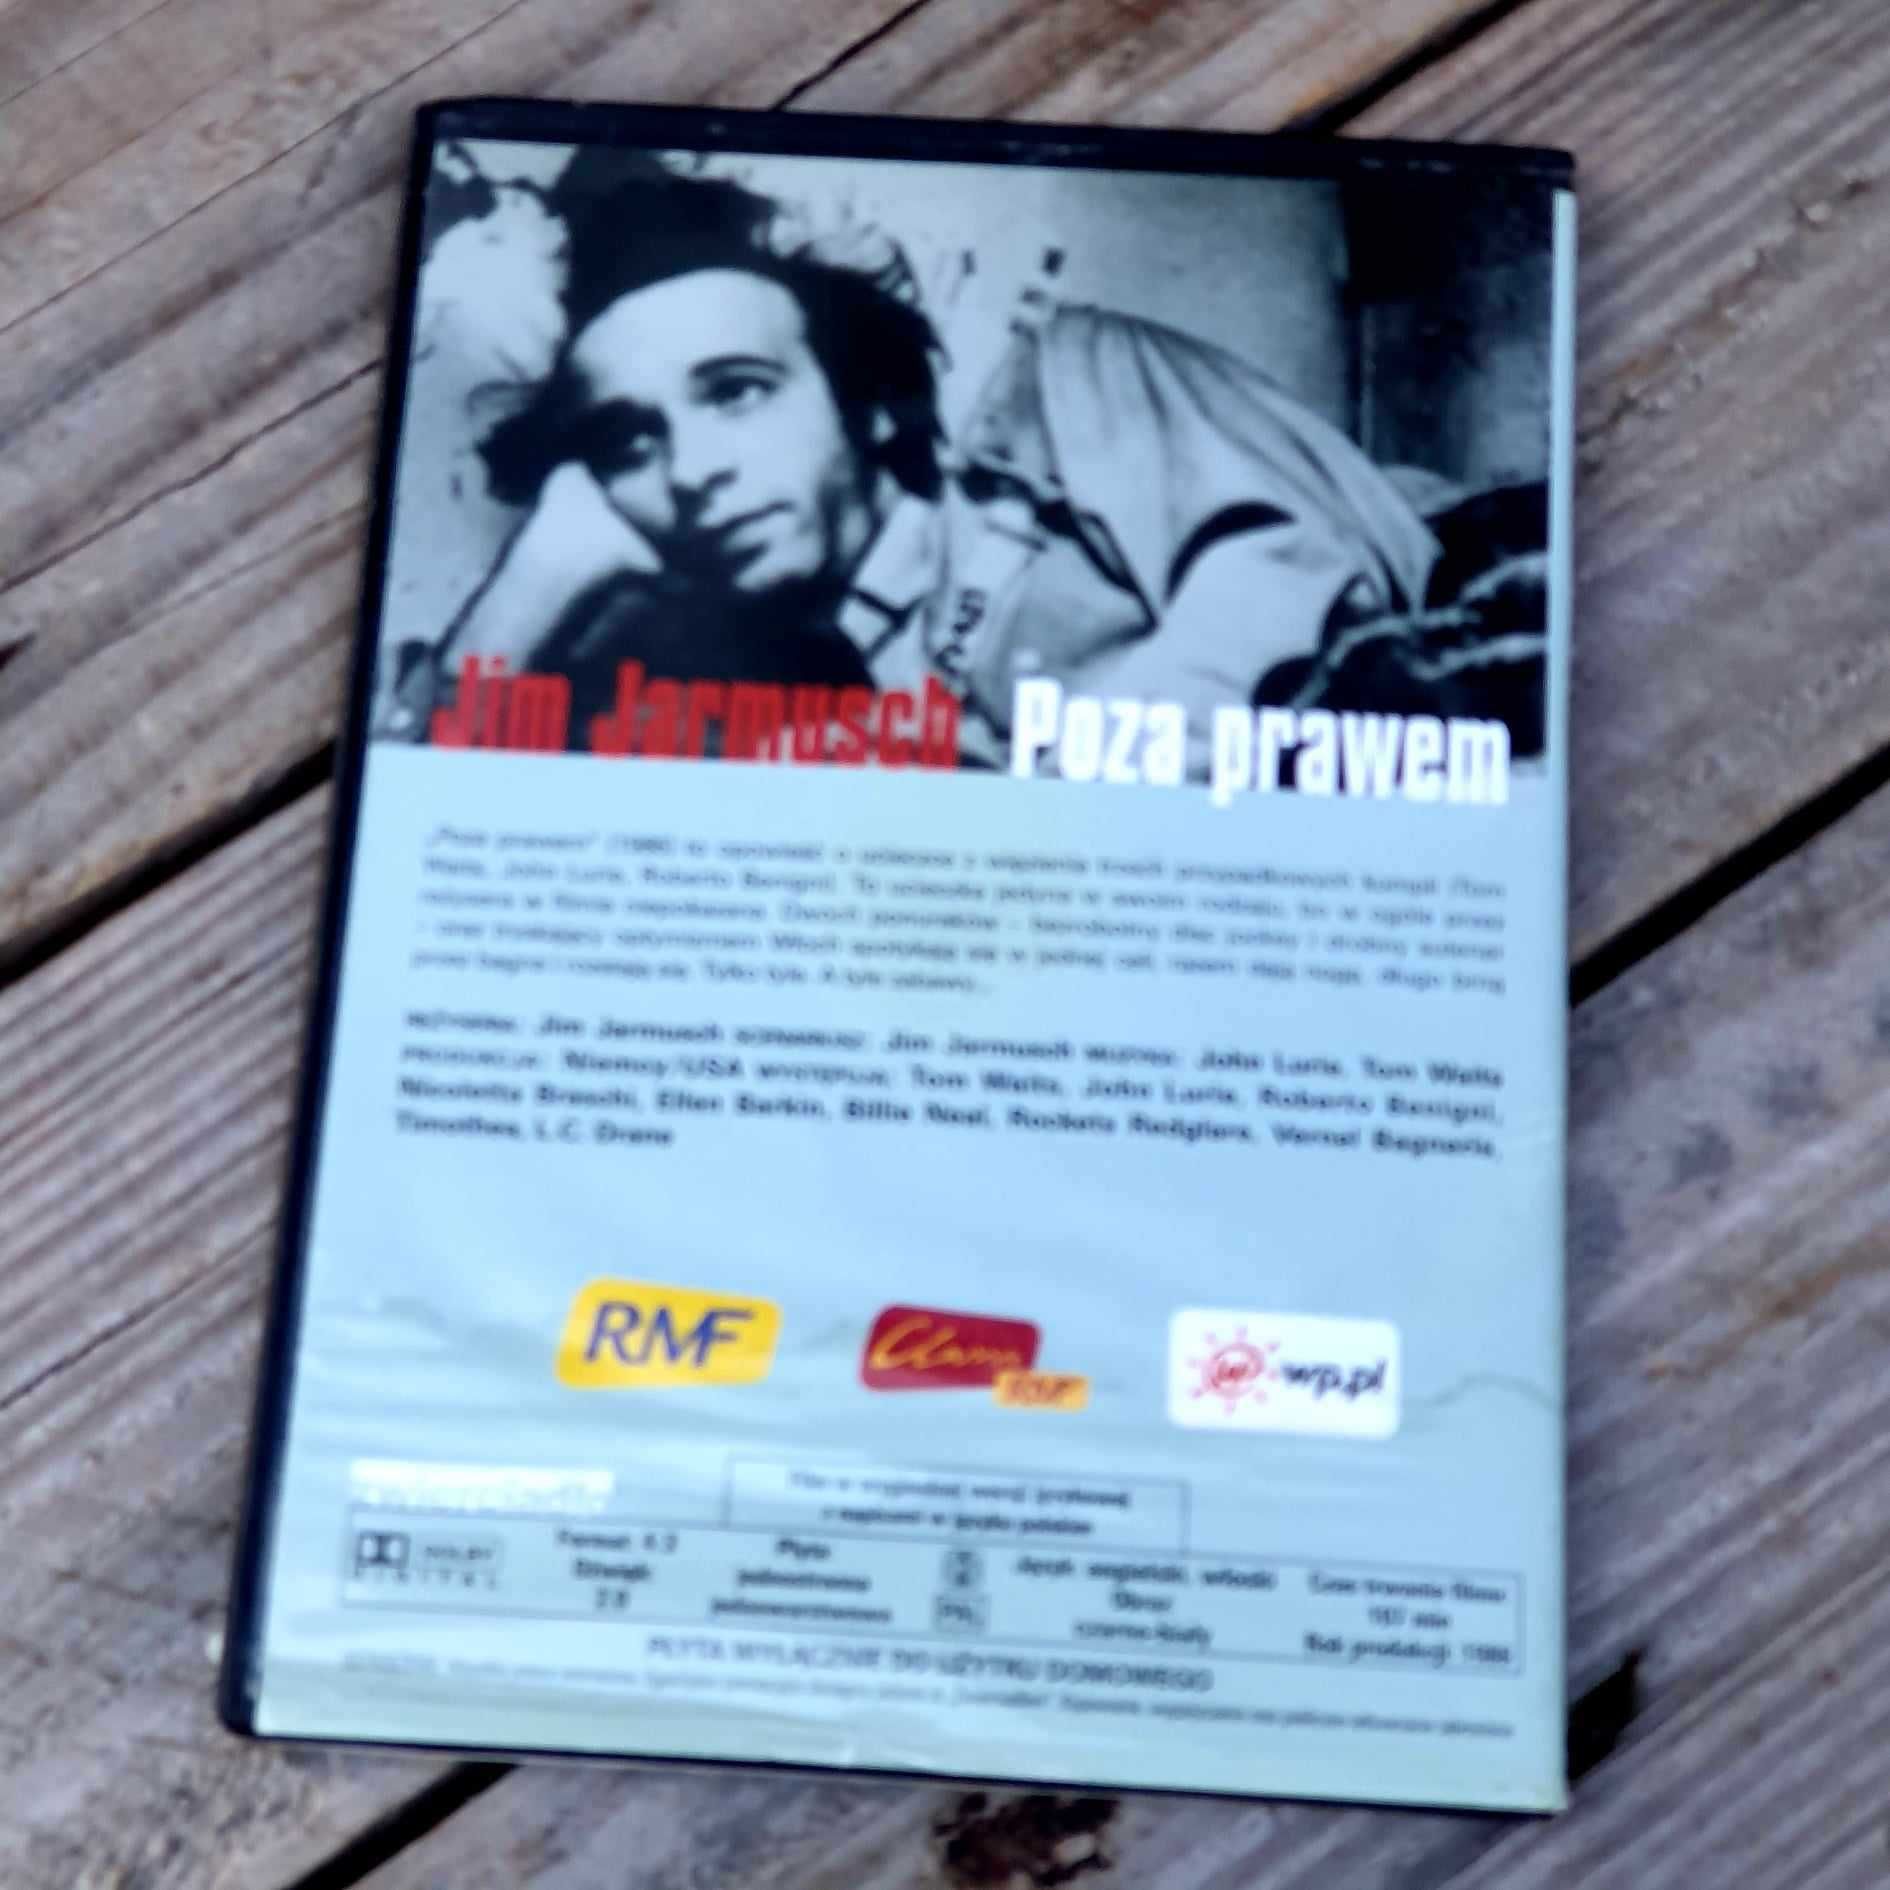 Poza Prawem Jim Jarmusch Tom Waits Roberto Benigni - Film